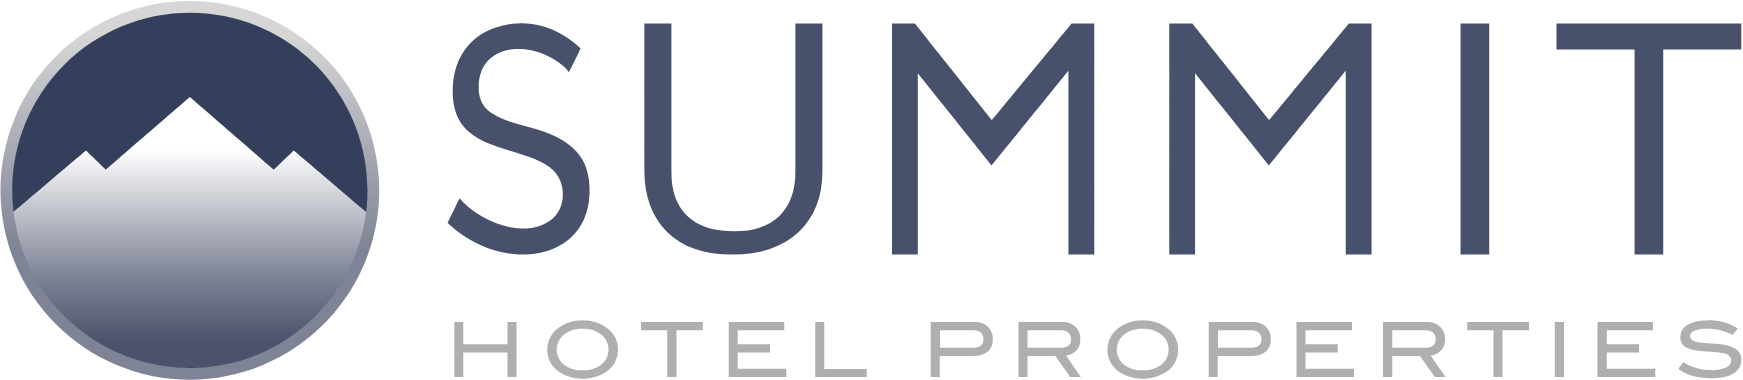 Summit Hotel Properties logo large (transparent PNG)